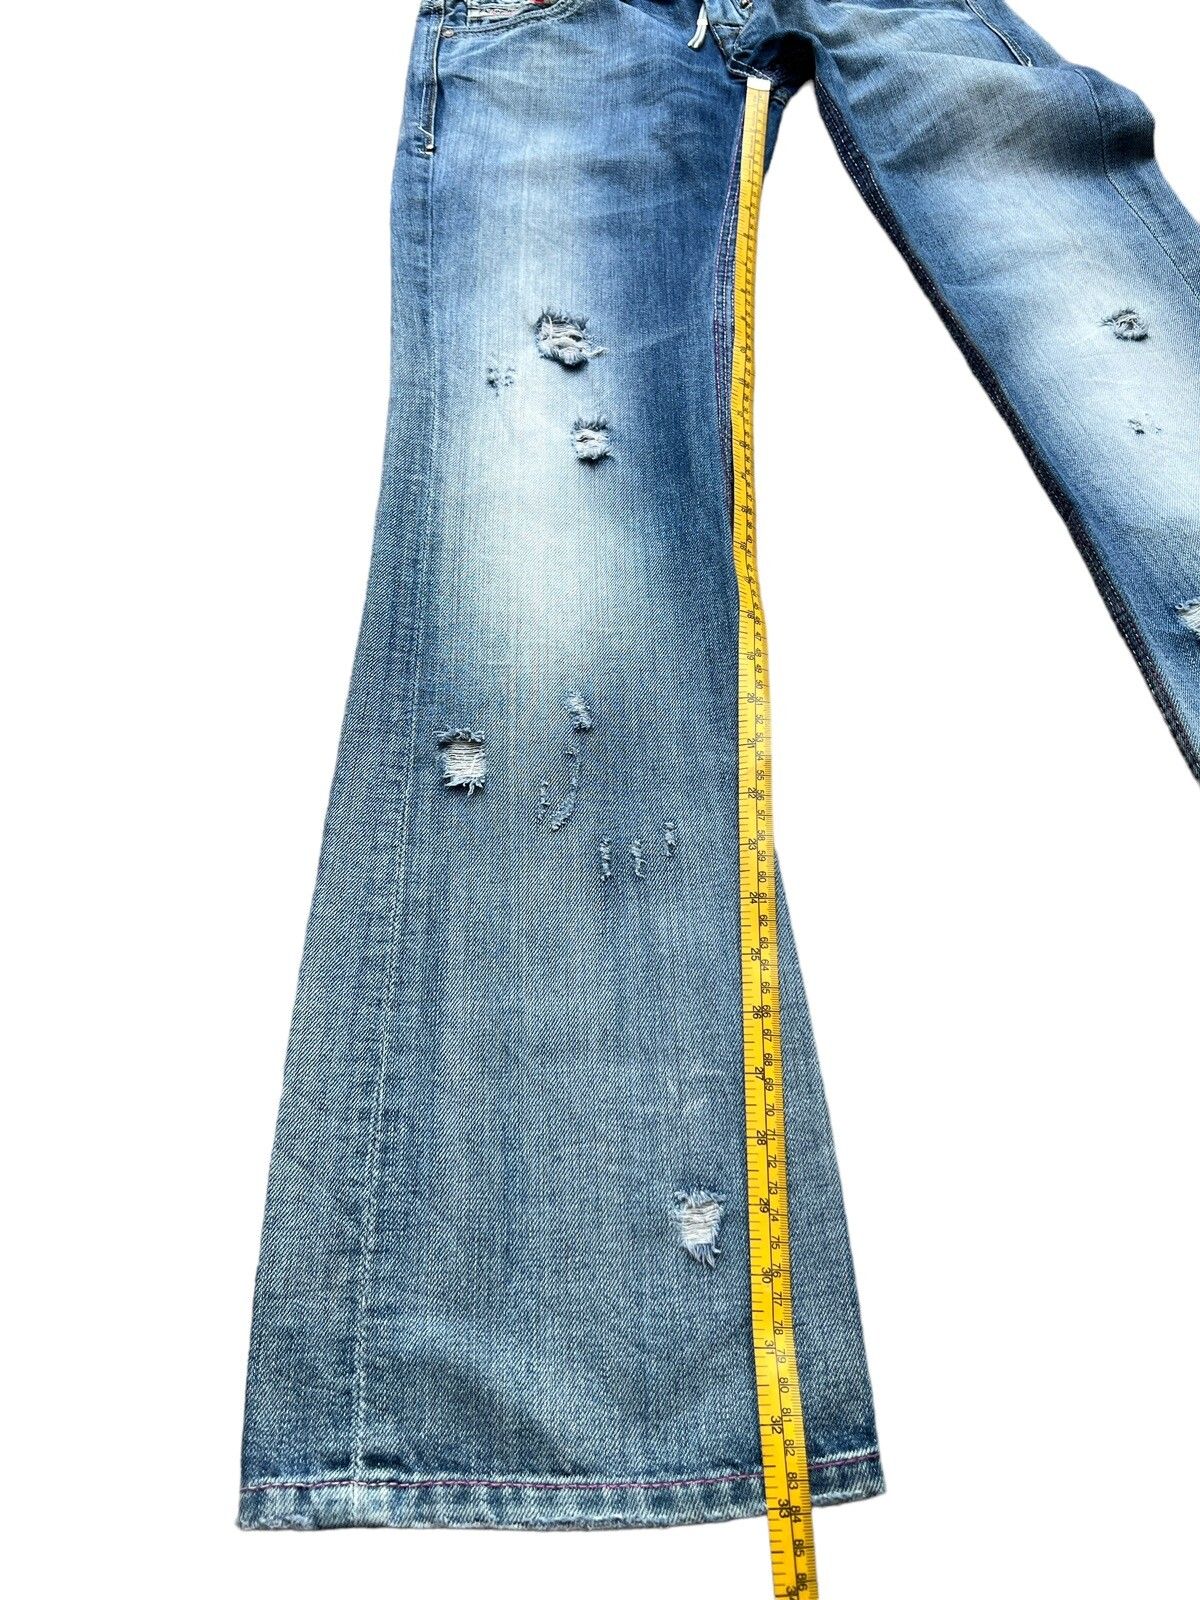 Vintage Diesel Leather Distressed Flare Lowrise Jeans 30x33 - 11